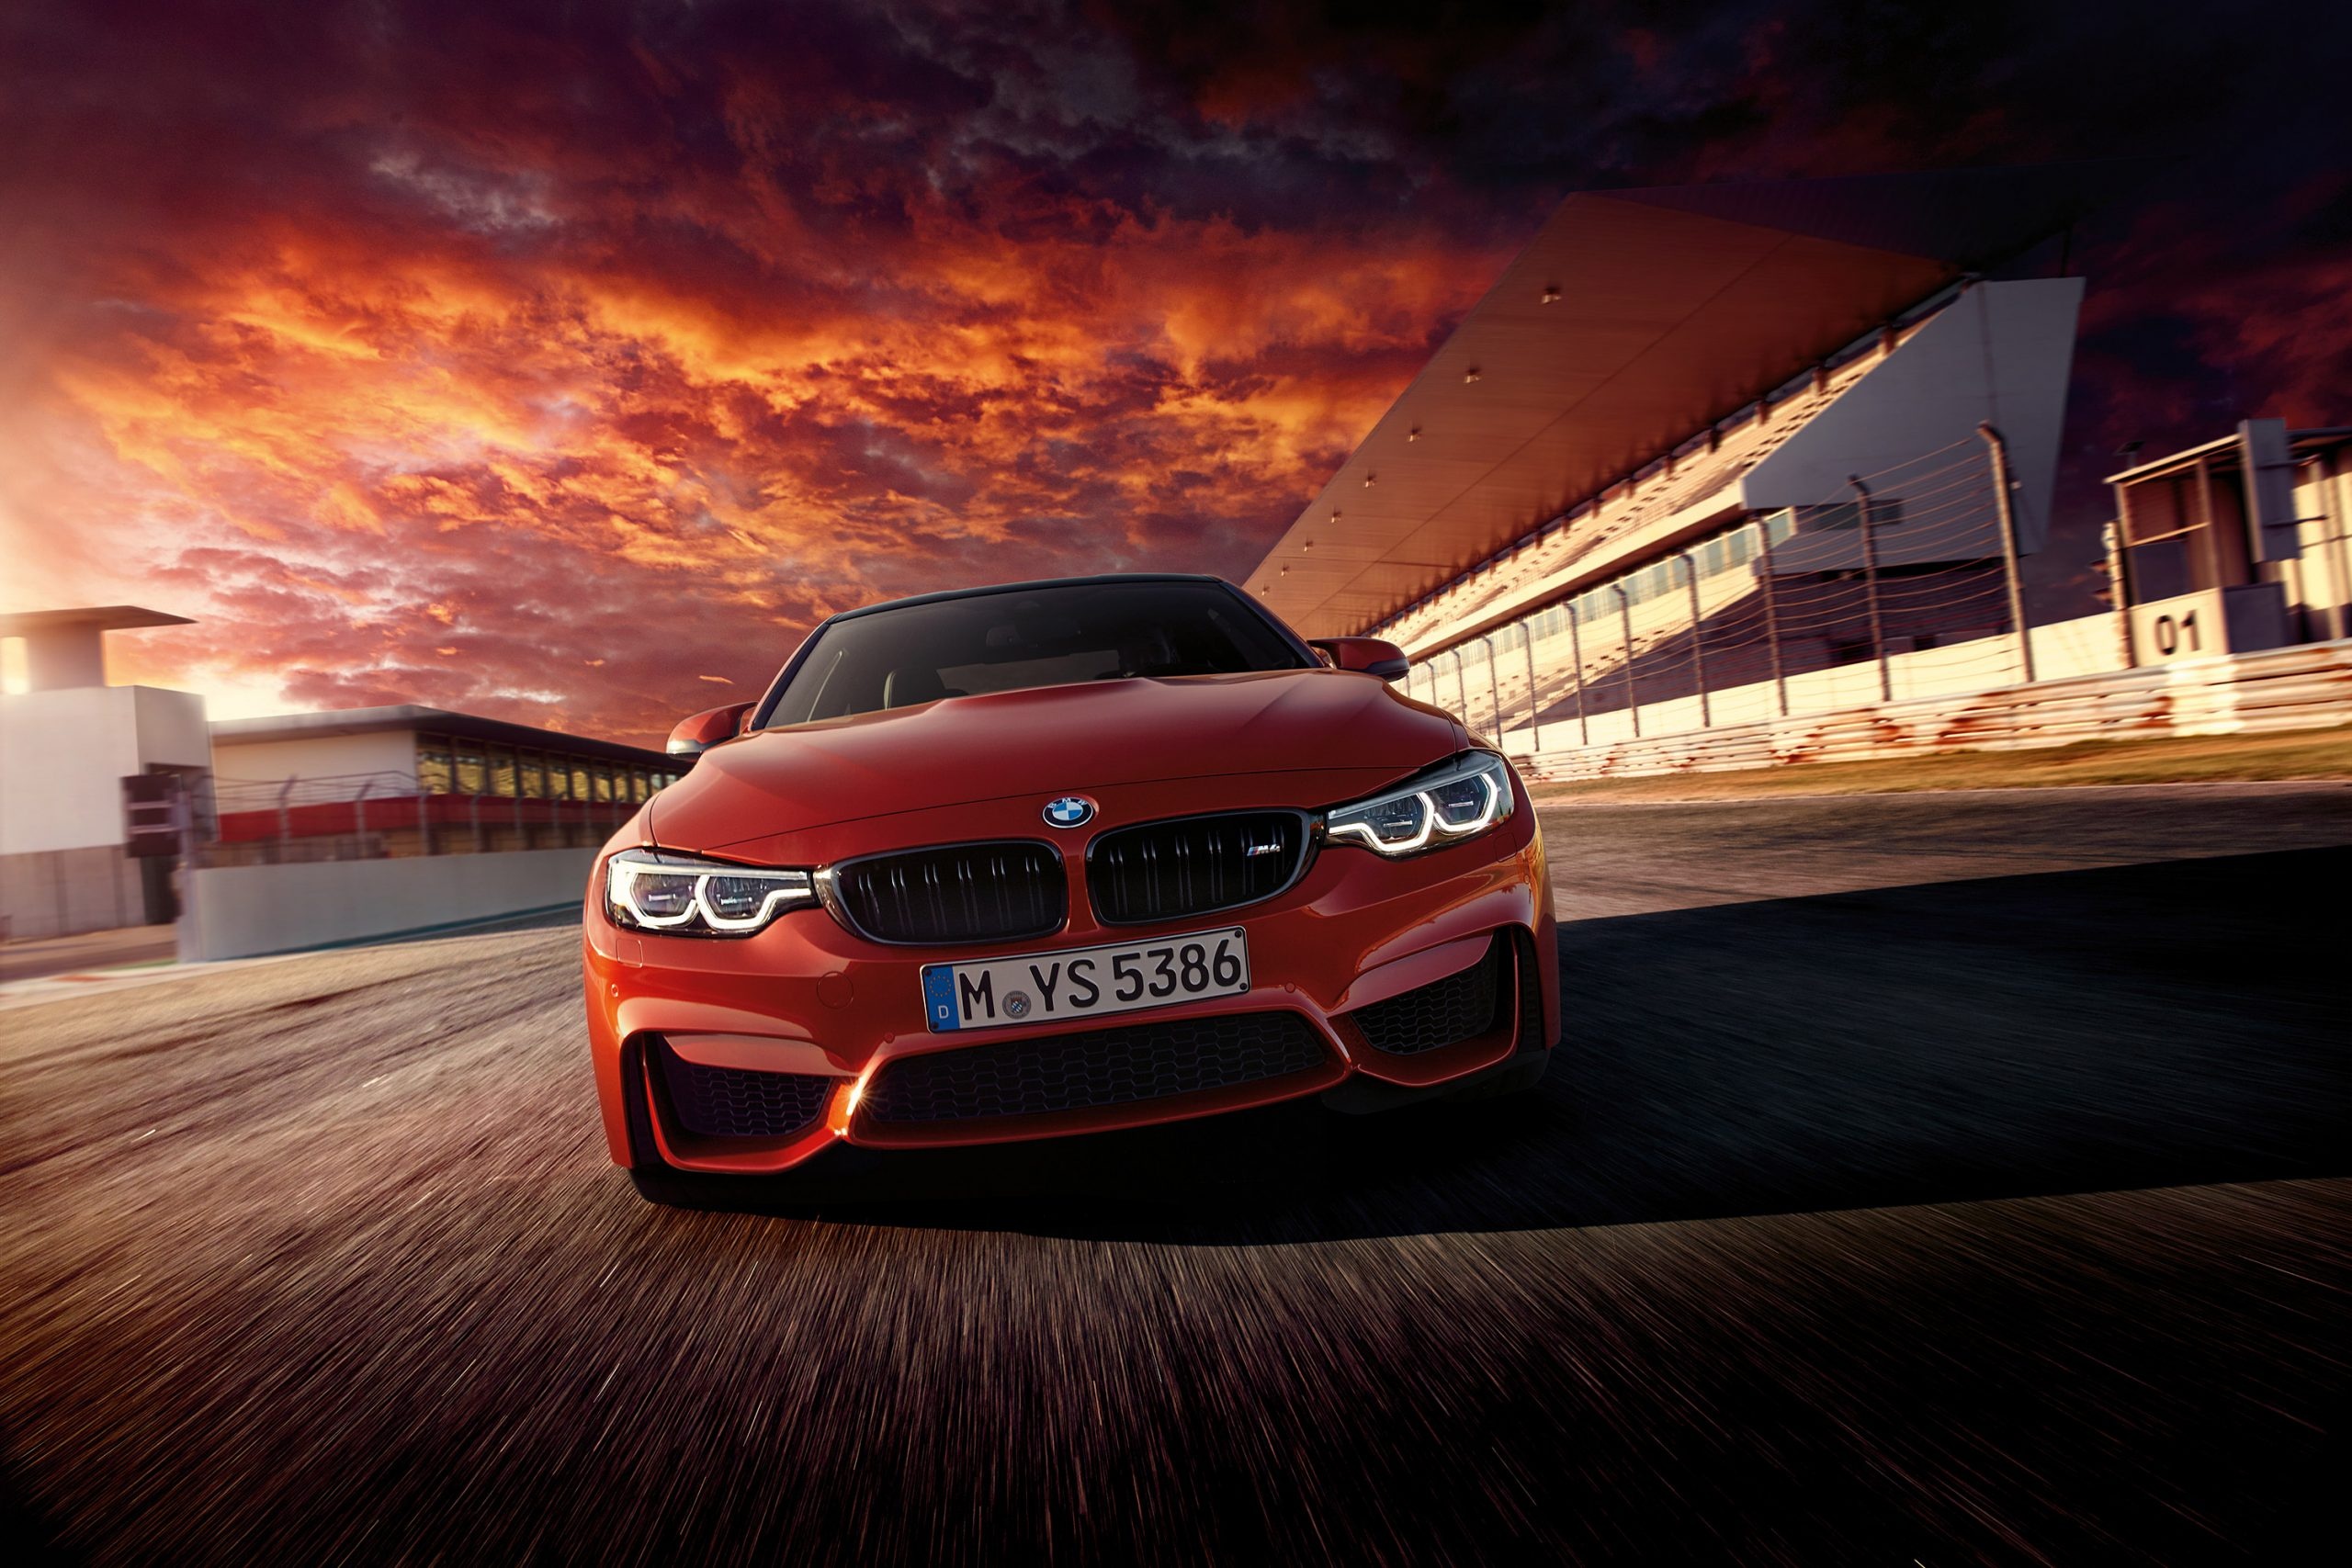 BMW M4, 2018 model, Striking design, High-performance car, 2560x1710 HD Desktop